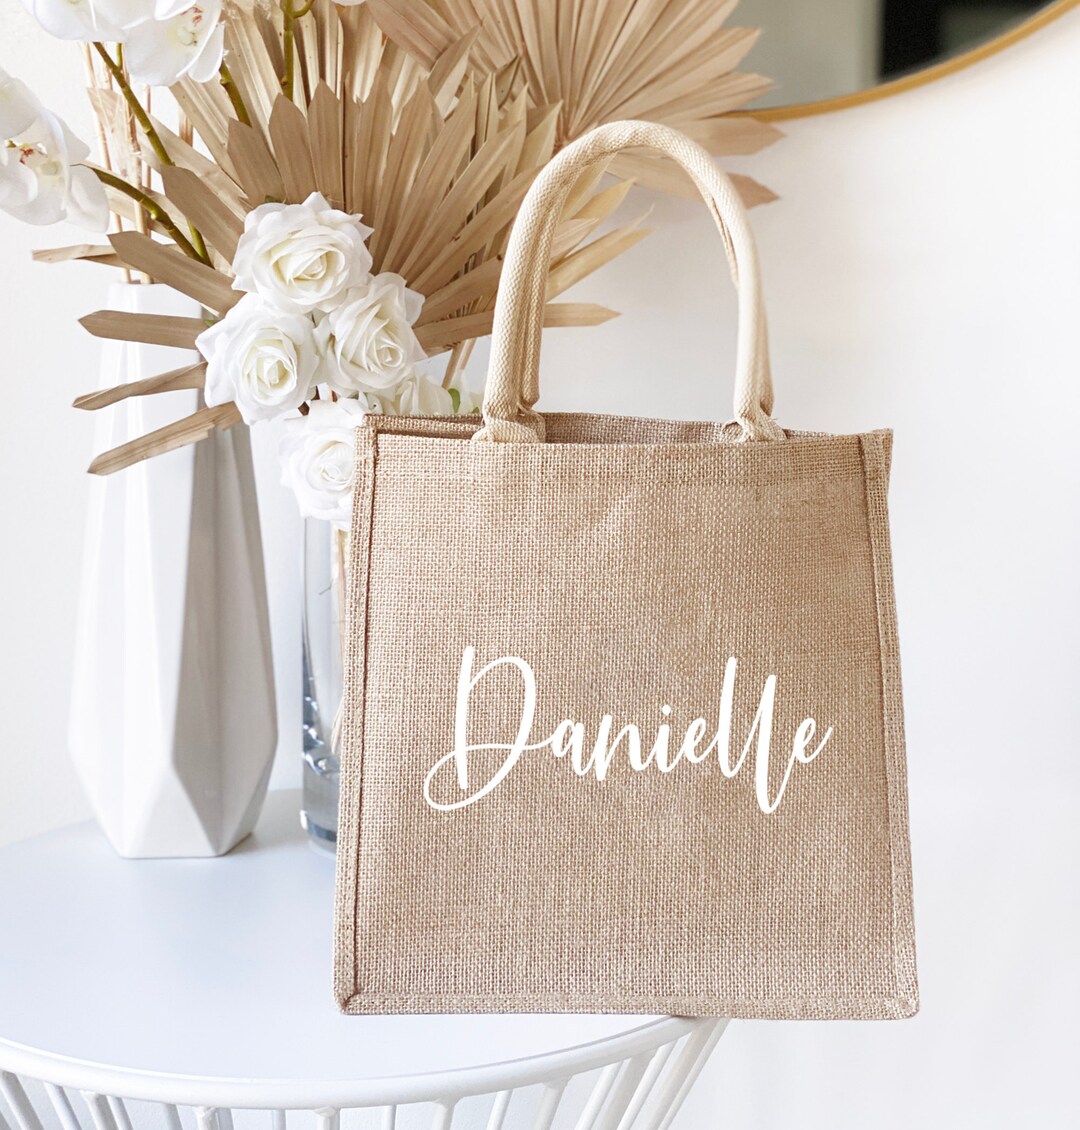 Rachel Green from Friends inspired bag recomendations? : r/handbags